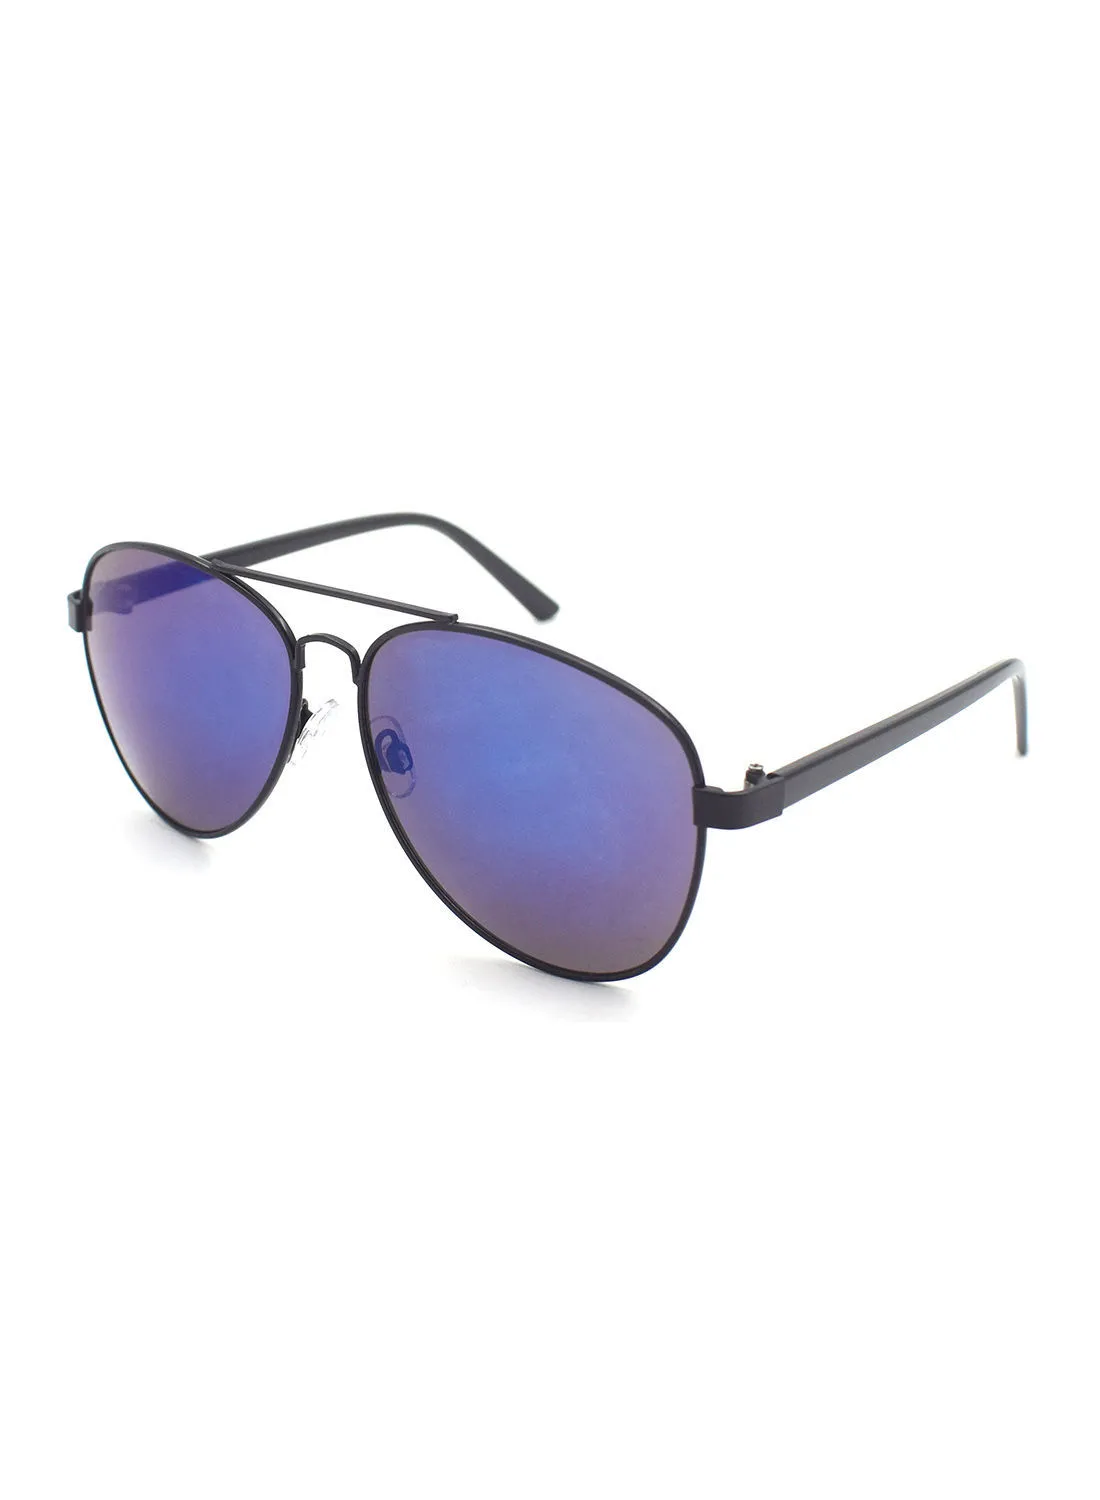 MADEYES Fashion Sunglasses EE21X019-1